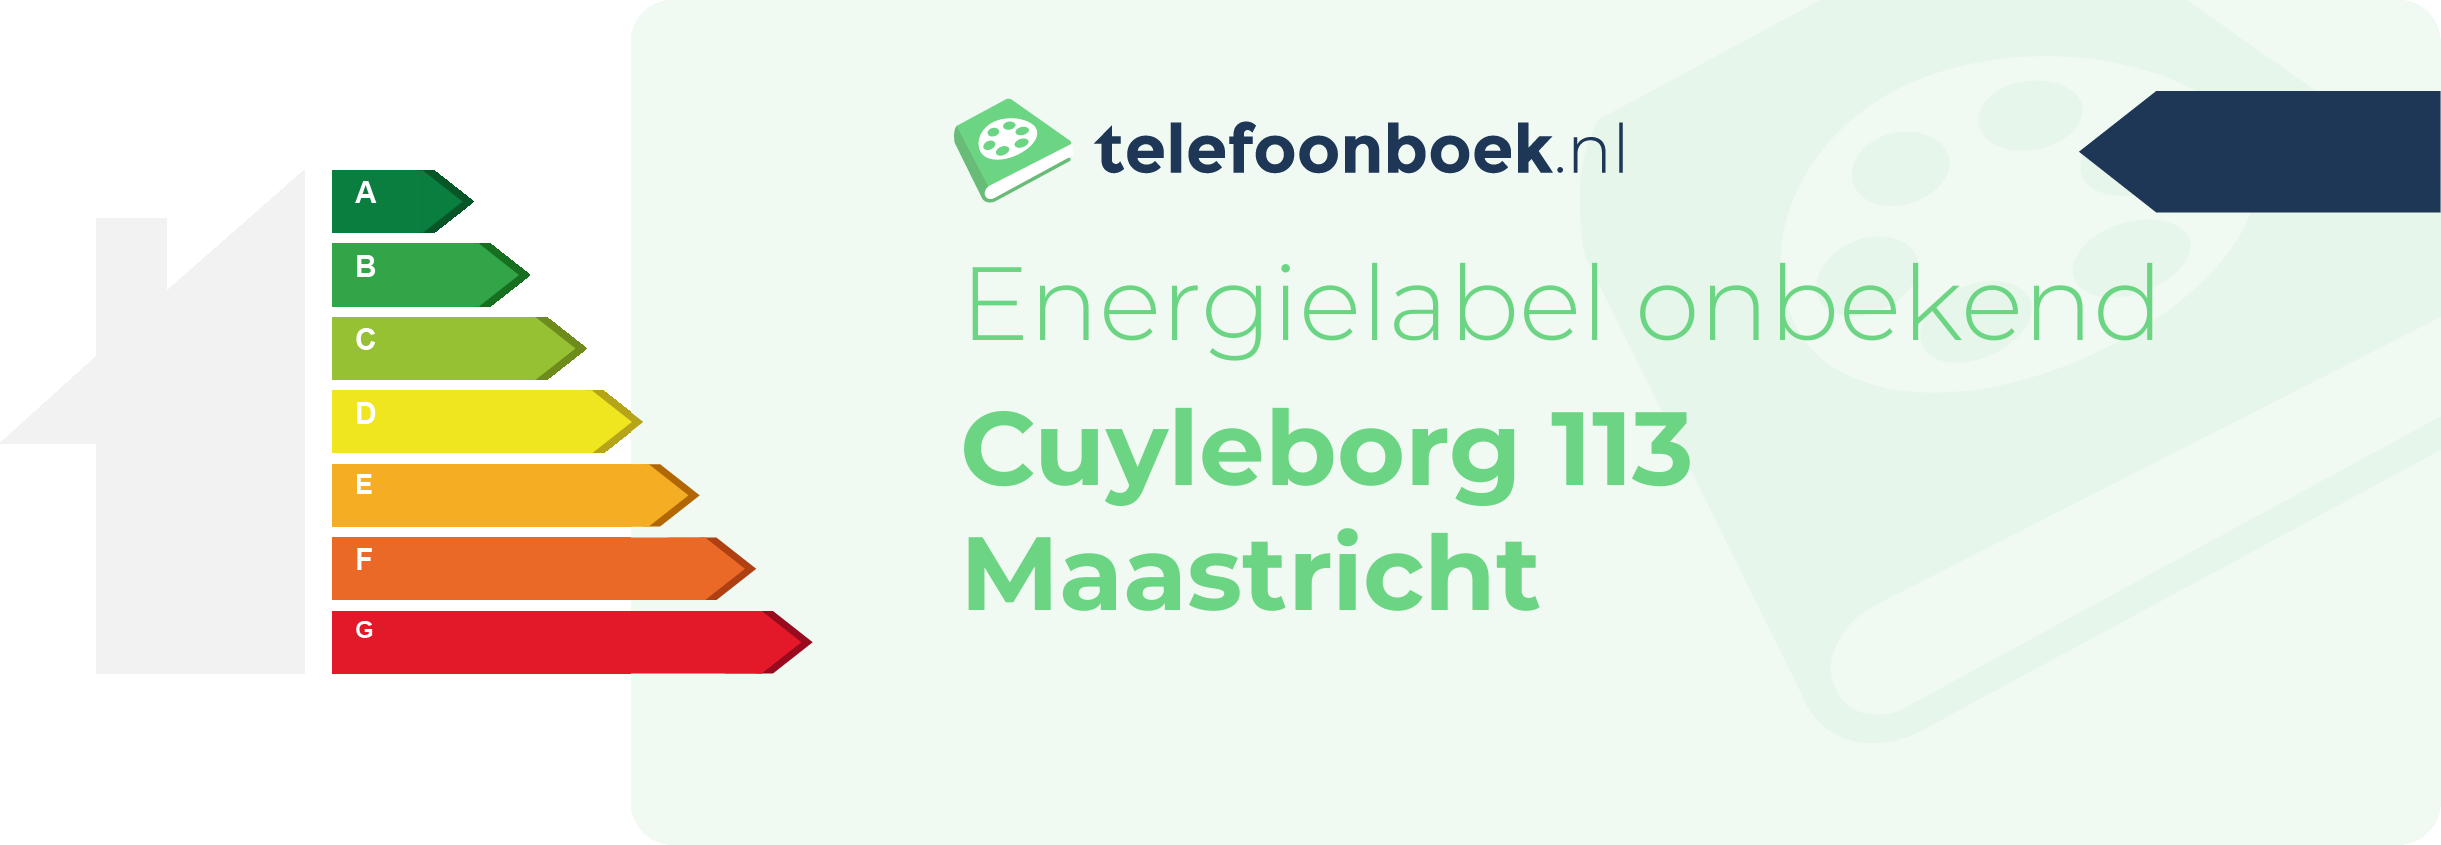 Energielabel Cuyleborg 113 Maastricht